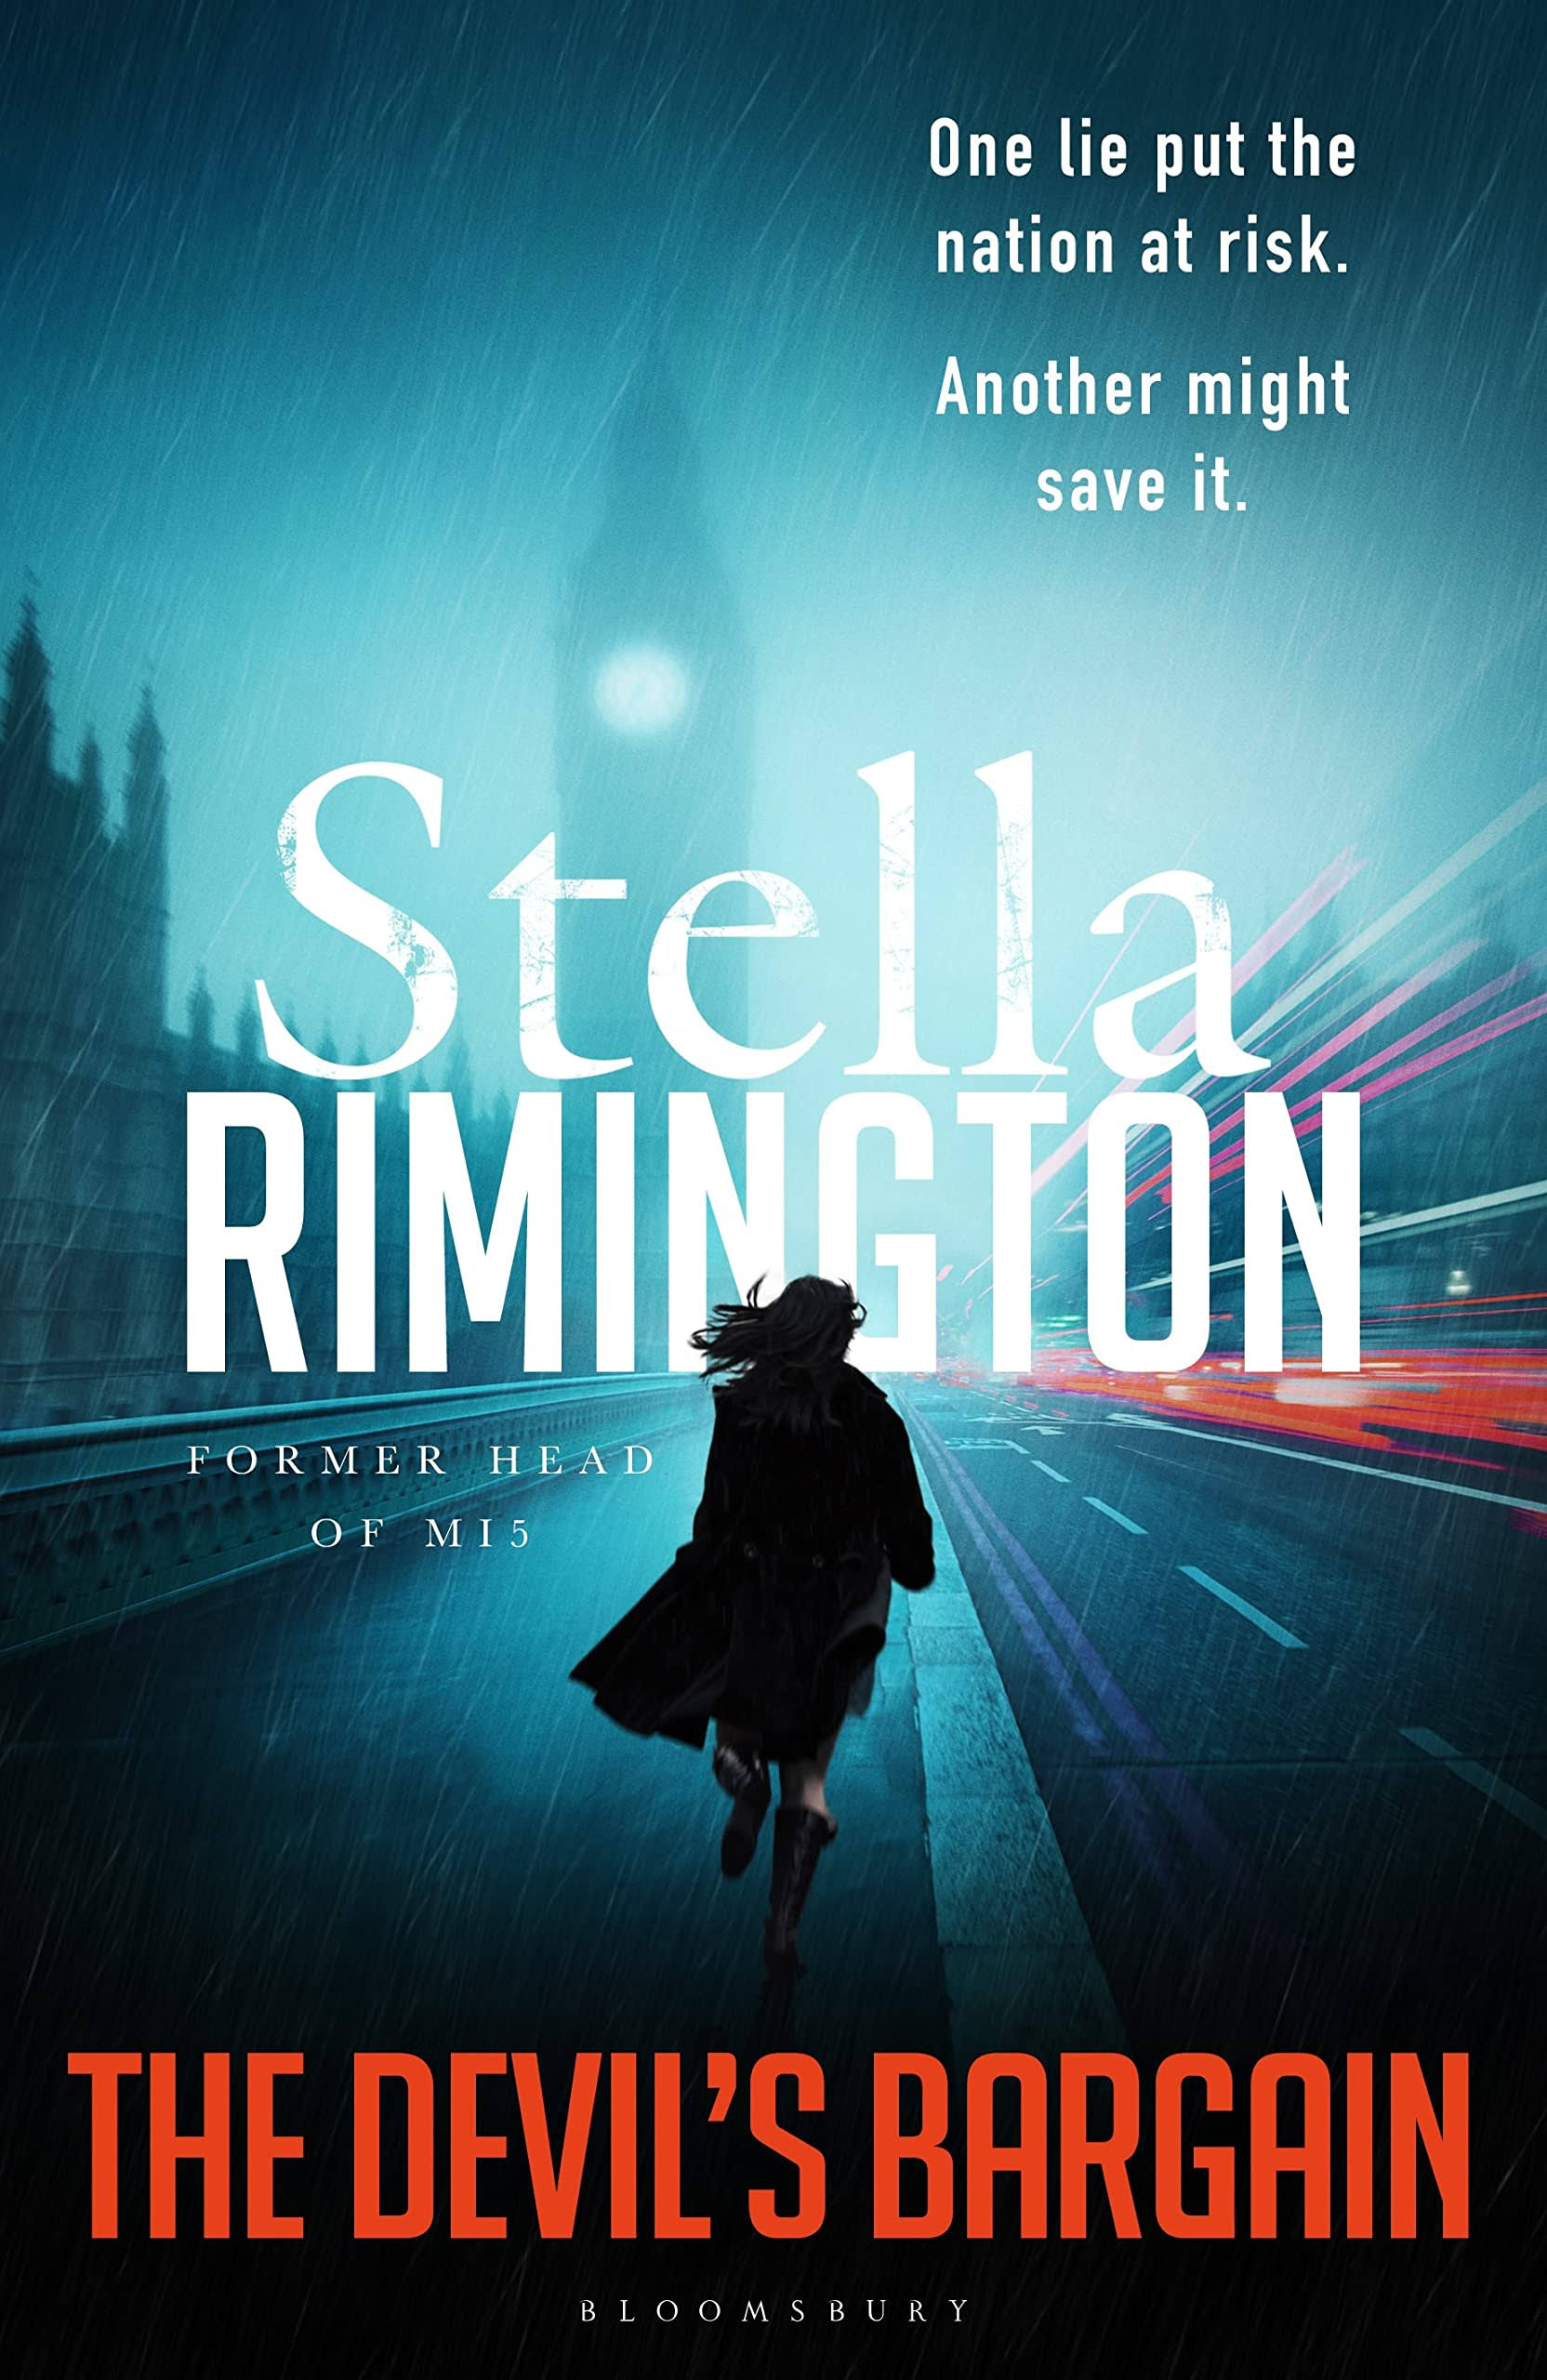 The Devil's Bargain by Stella Rimington